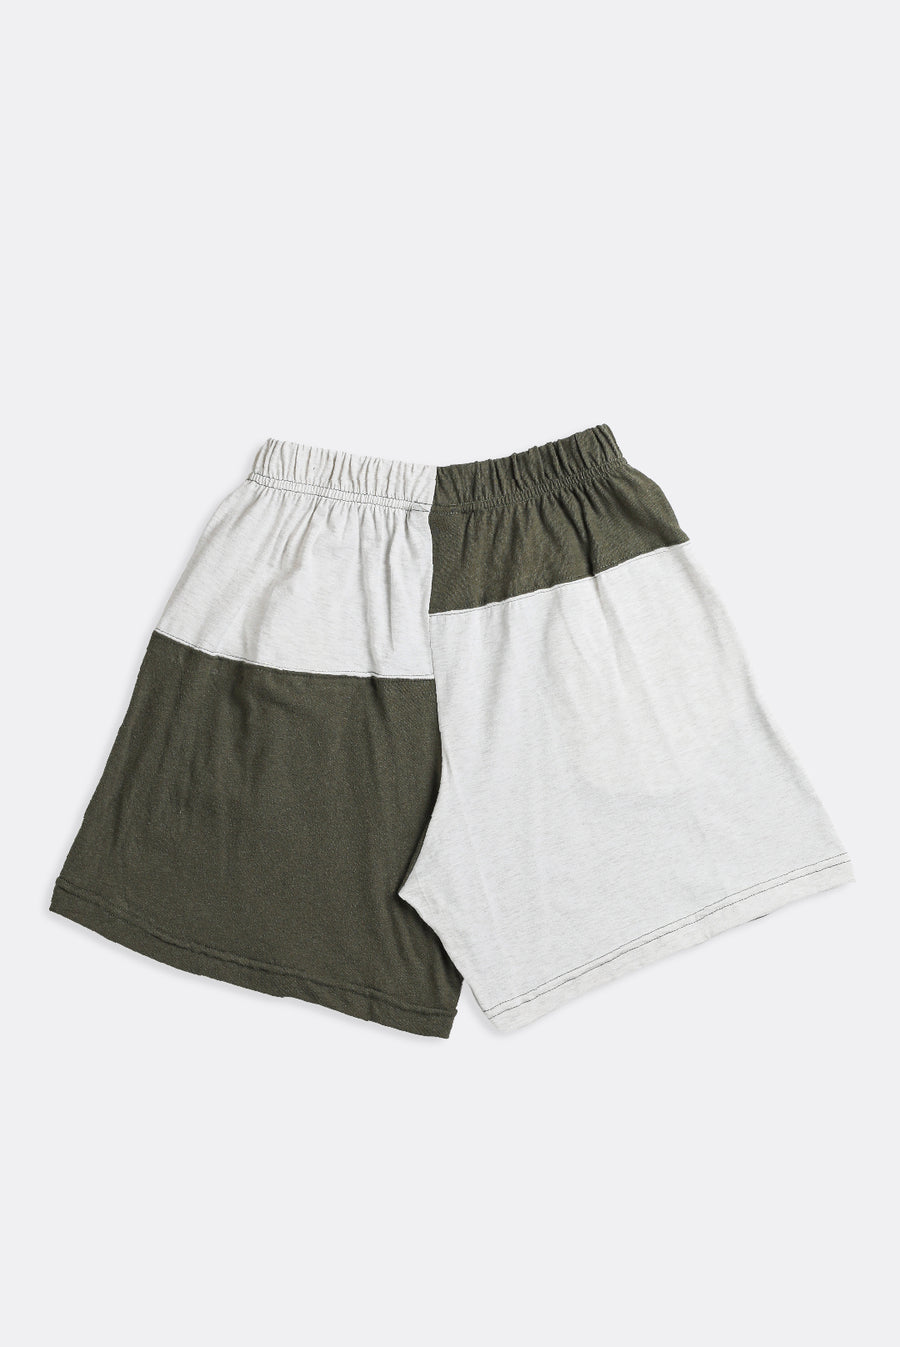 Unisex Rework Patchwork Tee Shorts - XS